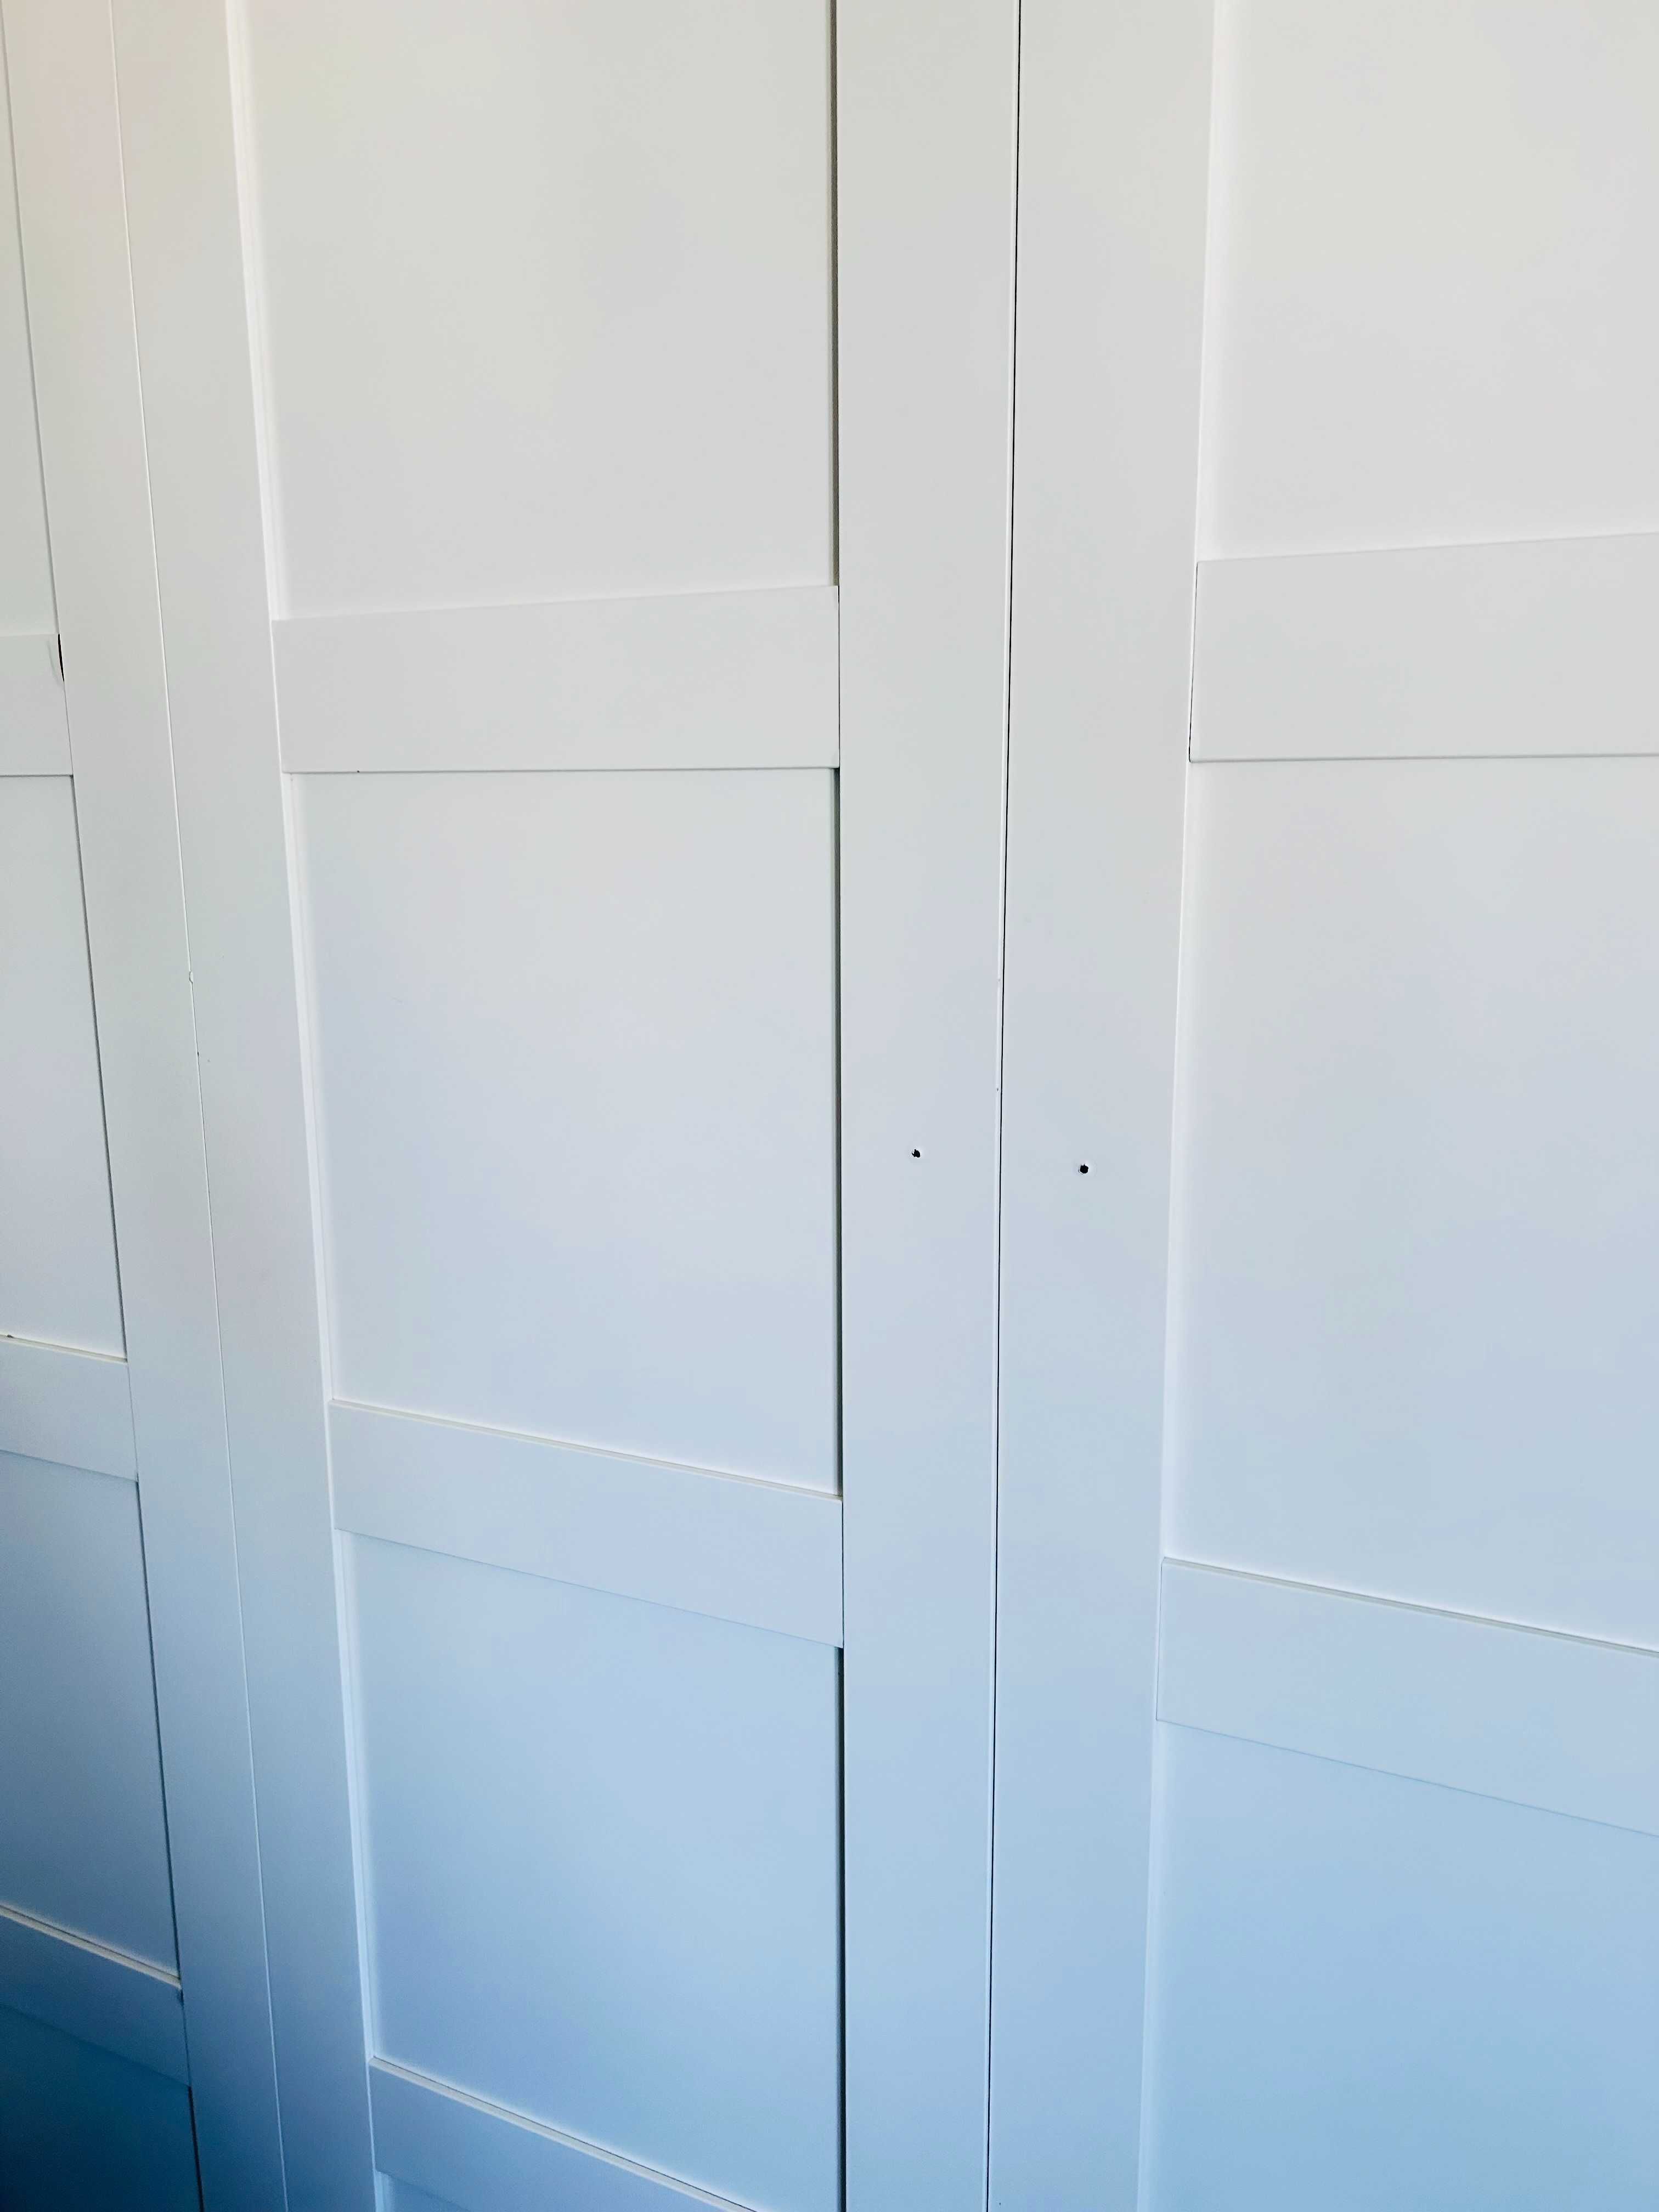 Drzwi do szafy Ikea Bergsbo 1 szt / Front szafy IKEA Bergsbo 230x50cm